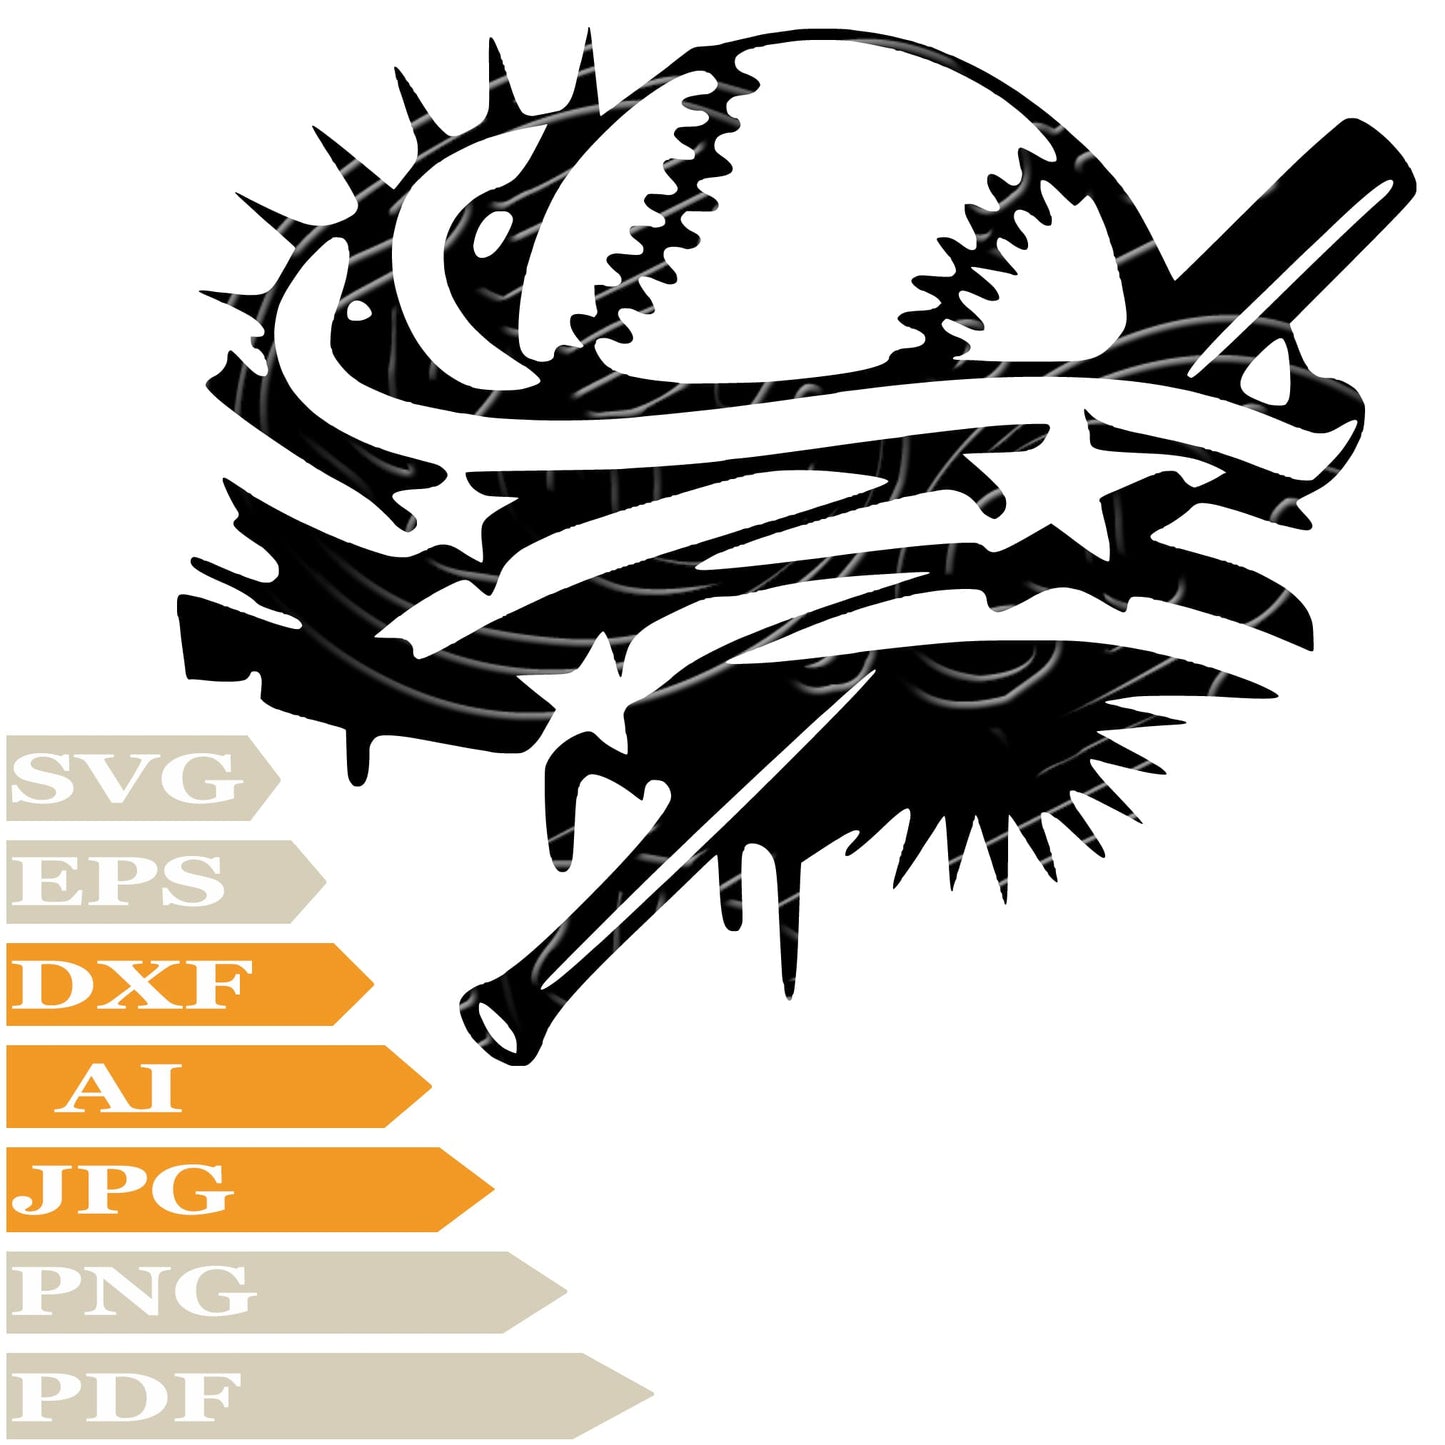 Baseball Funny Smile, Baseball Bat Svg File, Image Cut, Png, For Tattoo, Silhouette, Digital Vector Download, Cut File, Clipart, For Cricut